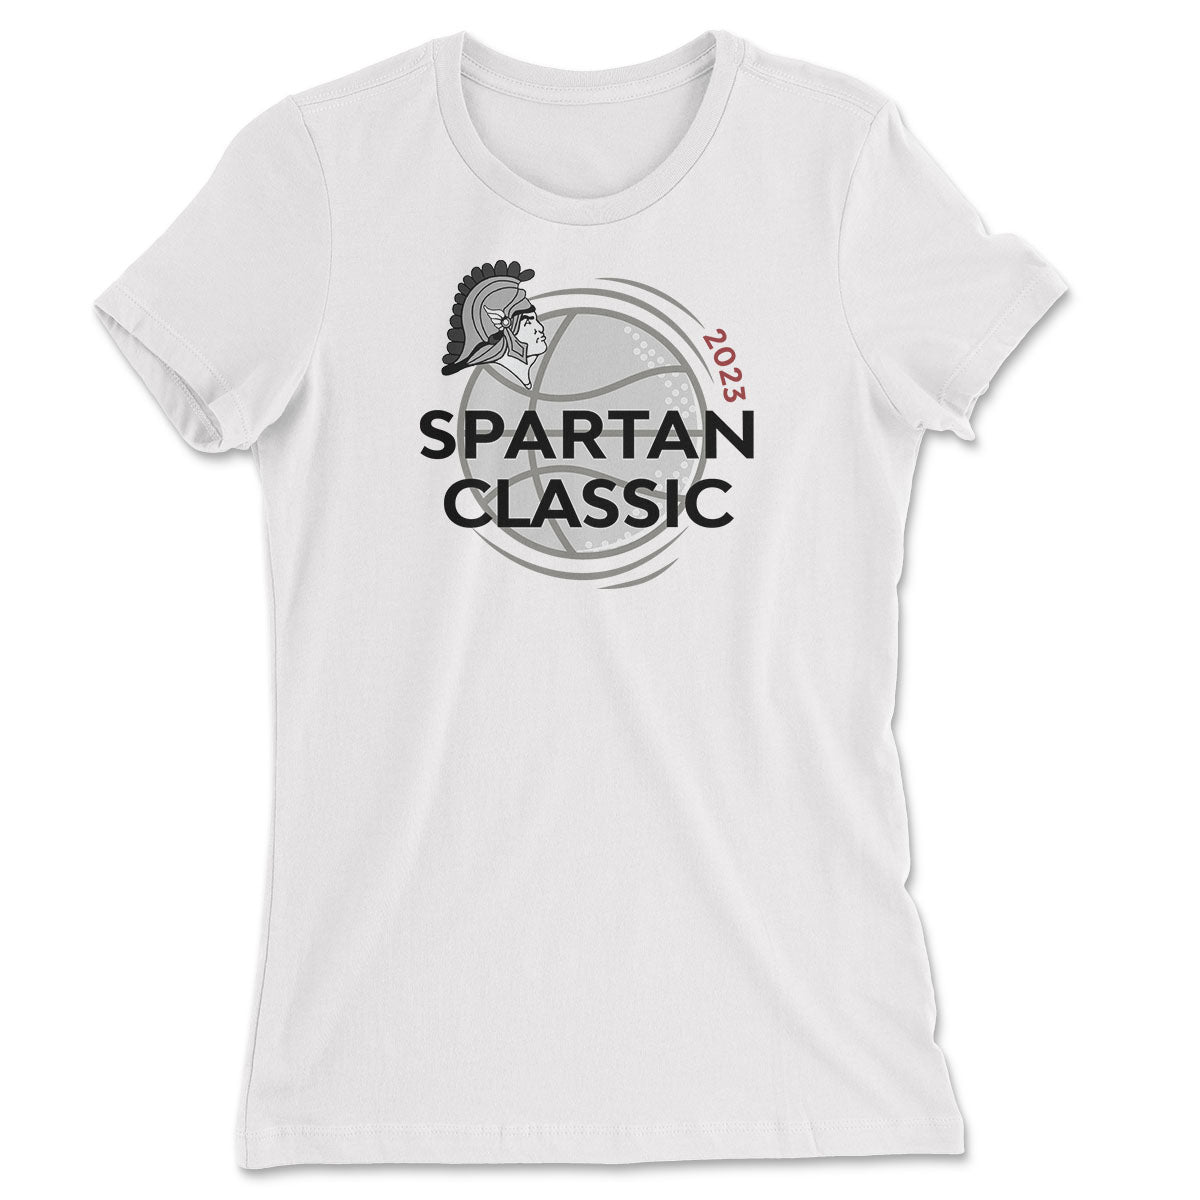 Spartan Classic // Women's Tee